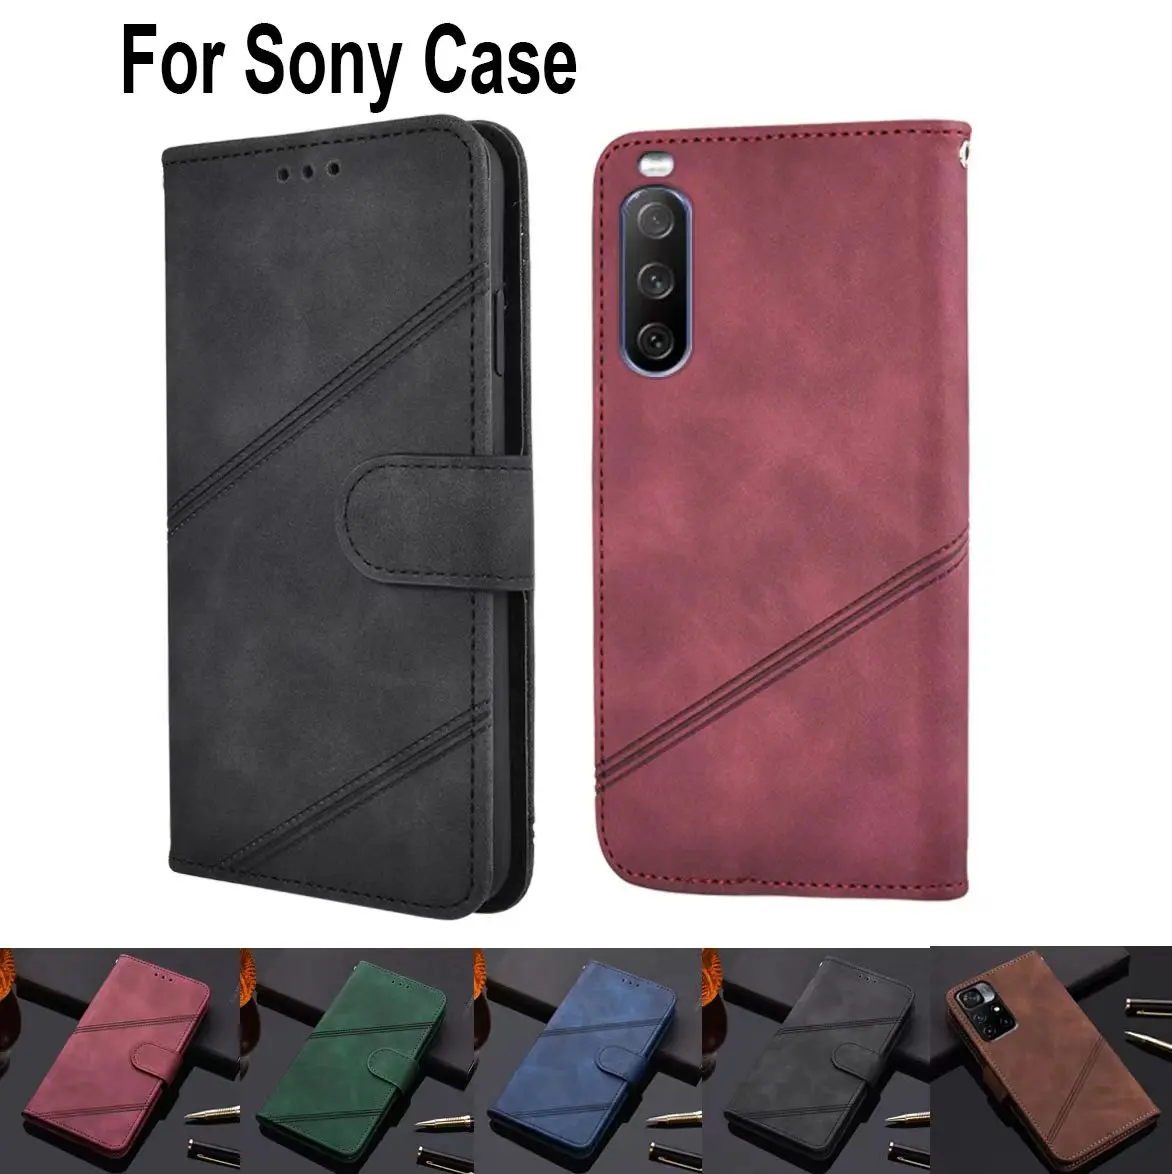 

Luxury Wallet Flip Cover For Sony Xperia XA XA1 XA2 Plus Ultra XA3 Z1 Z2 Z3 Z4 Z5 L1 L2 L3 L4 XZ1 XZ2 XZ3 XZ4 XZ5 Phone Case